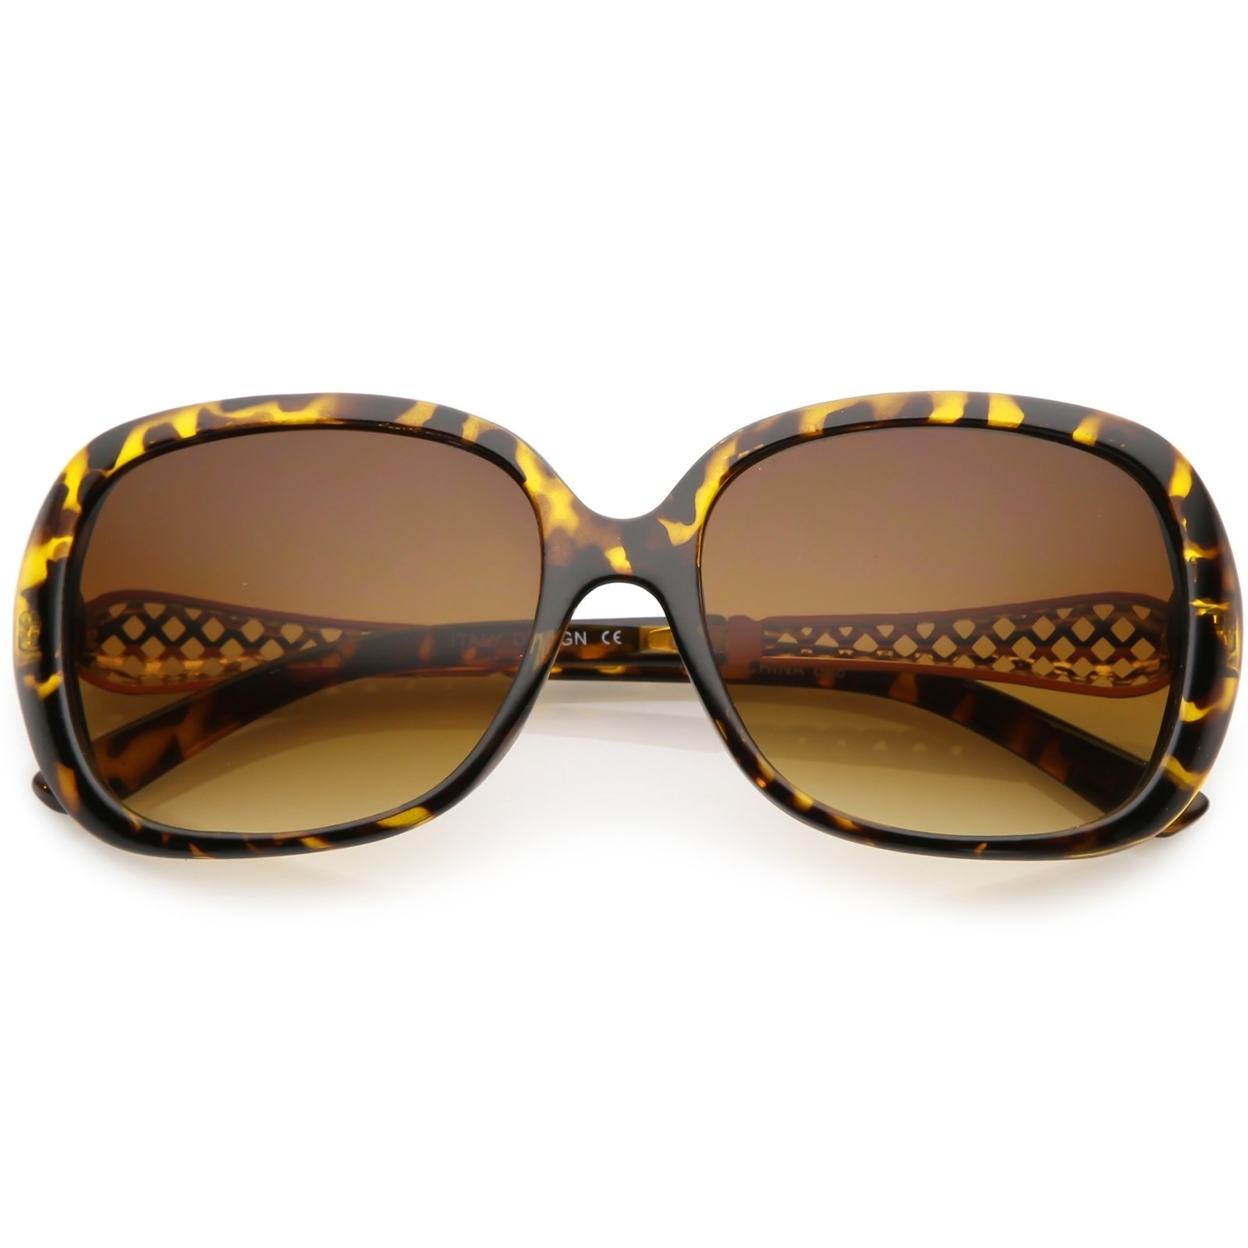 Women's Oversize Square Sunglasses With Metal Arm Accents Gradient Lens 59mm - Black Gold / Lavender